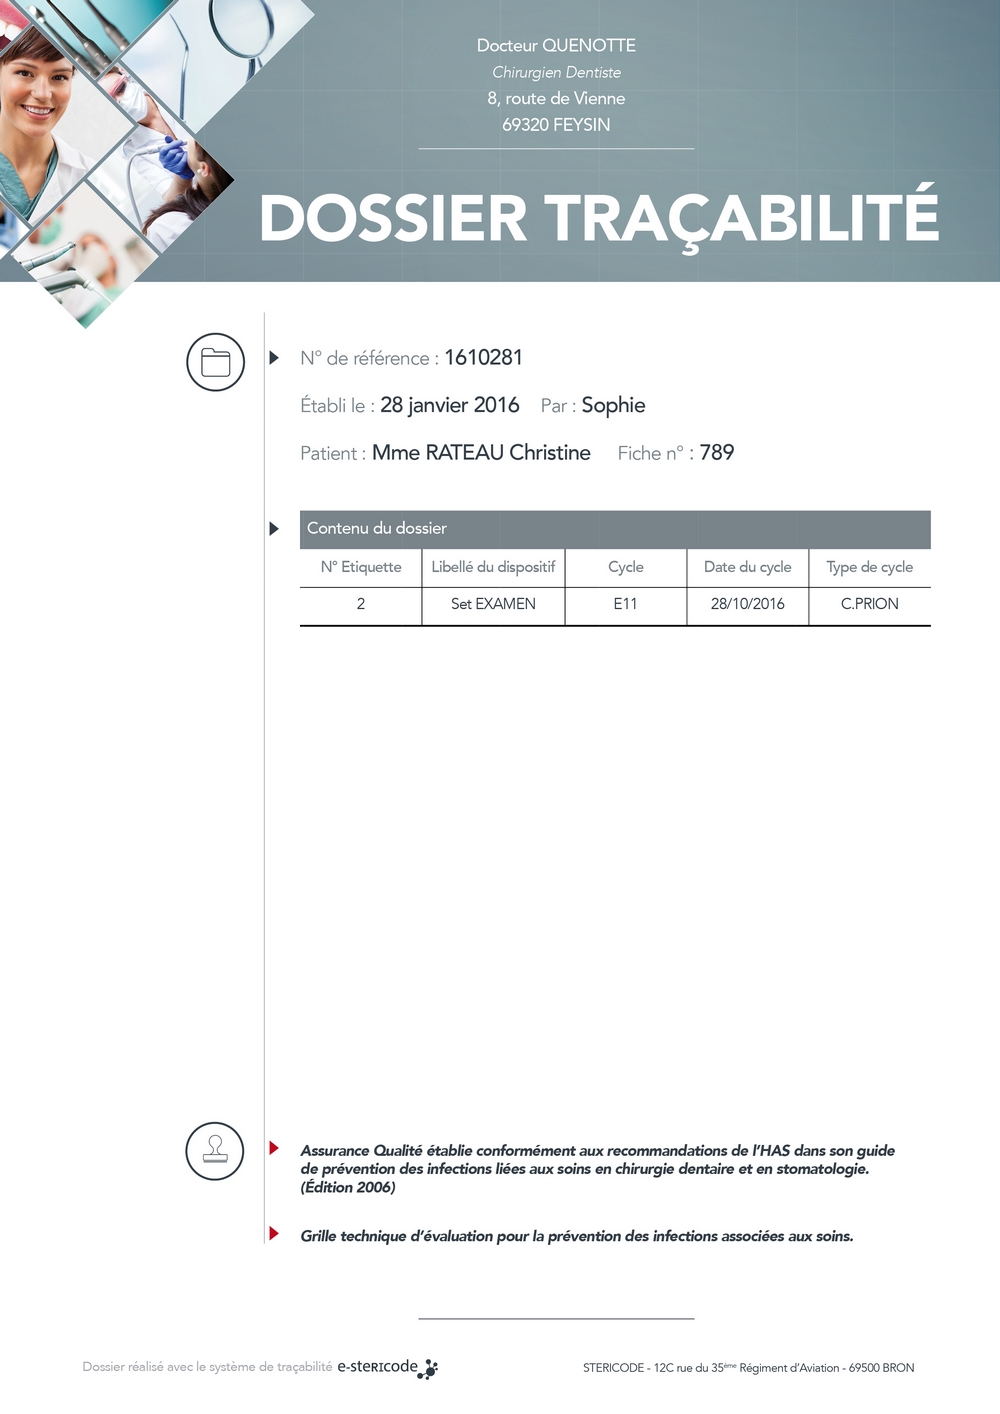 e-stericode - Dossier de traçabilité